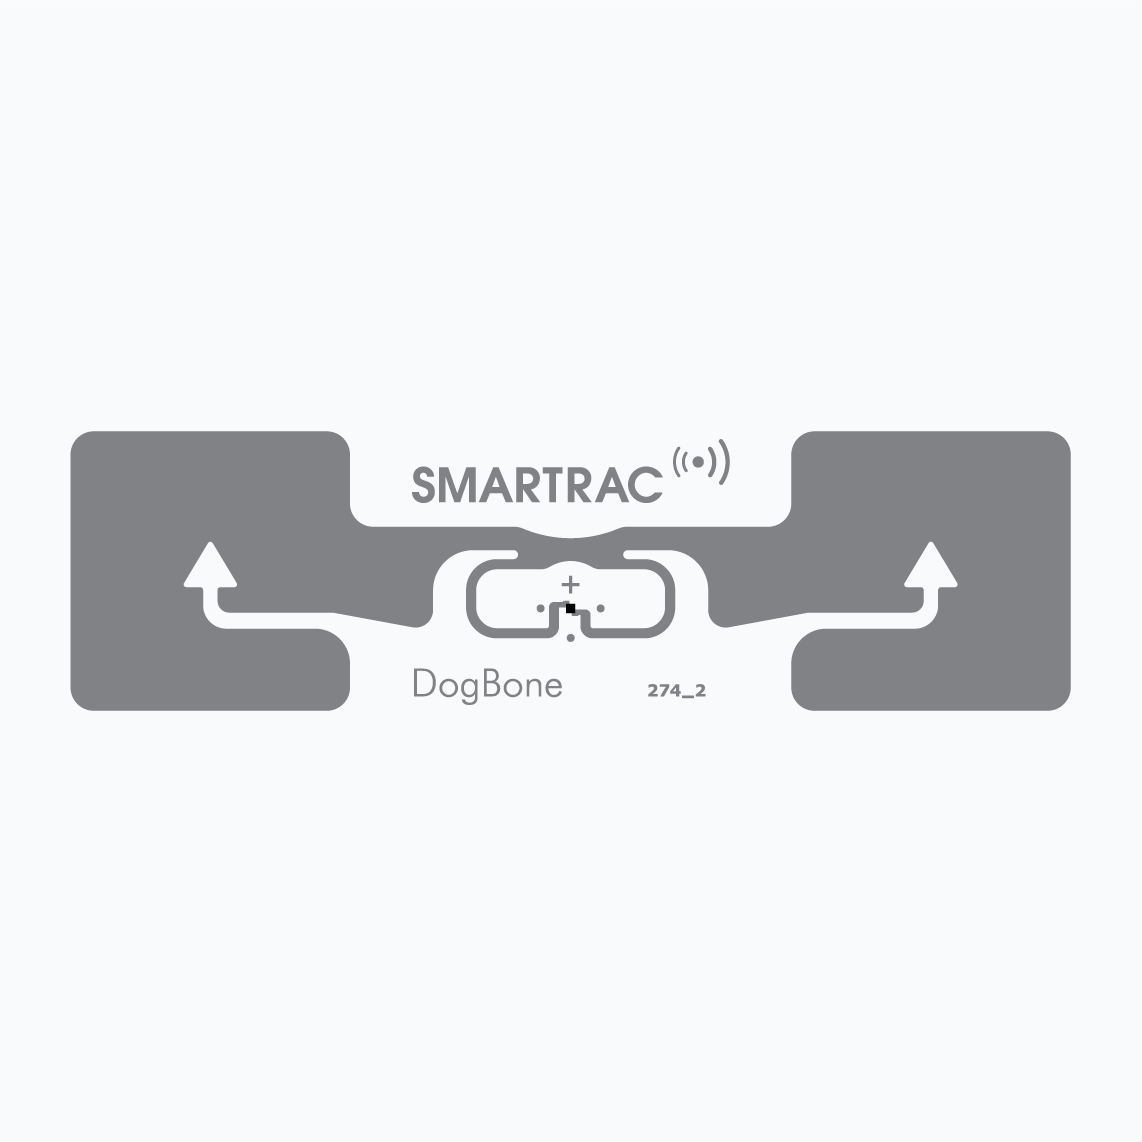 UHF RFID Inlay: Dogbone, Monza 4D